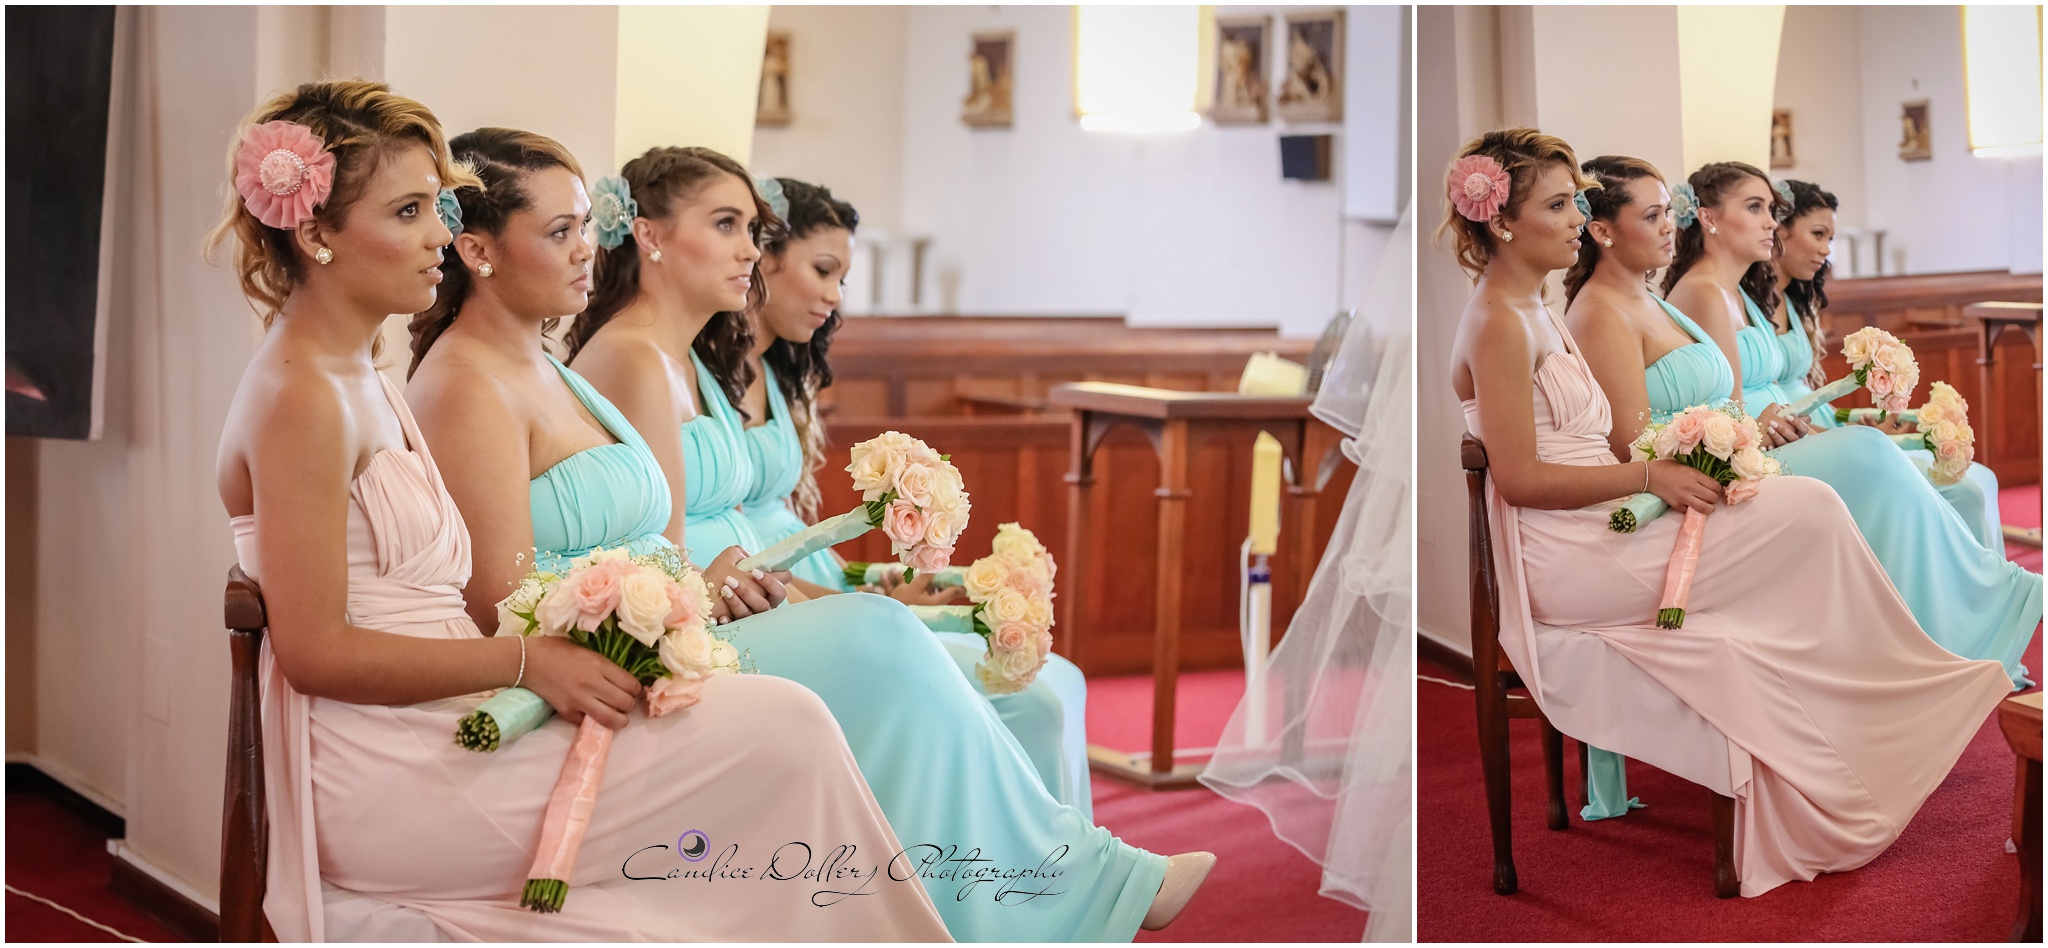 Paula & Jaycee's Wedding - Cypress Dale - Candice Dollery Photography_3042